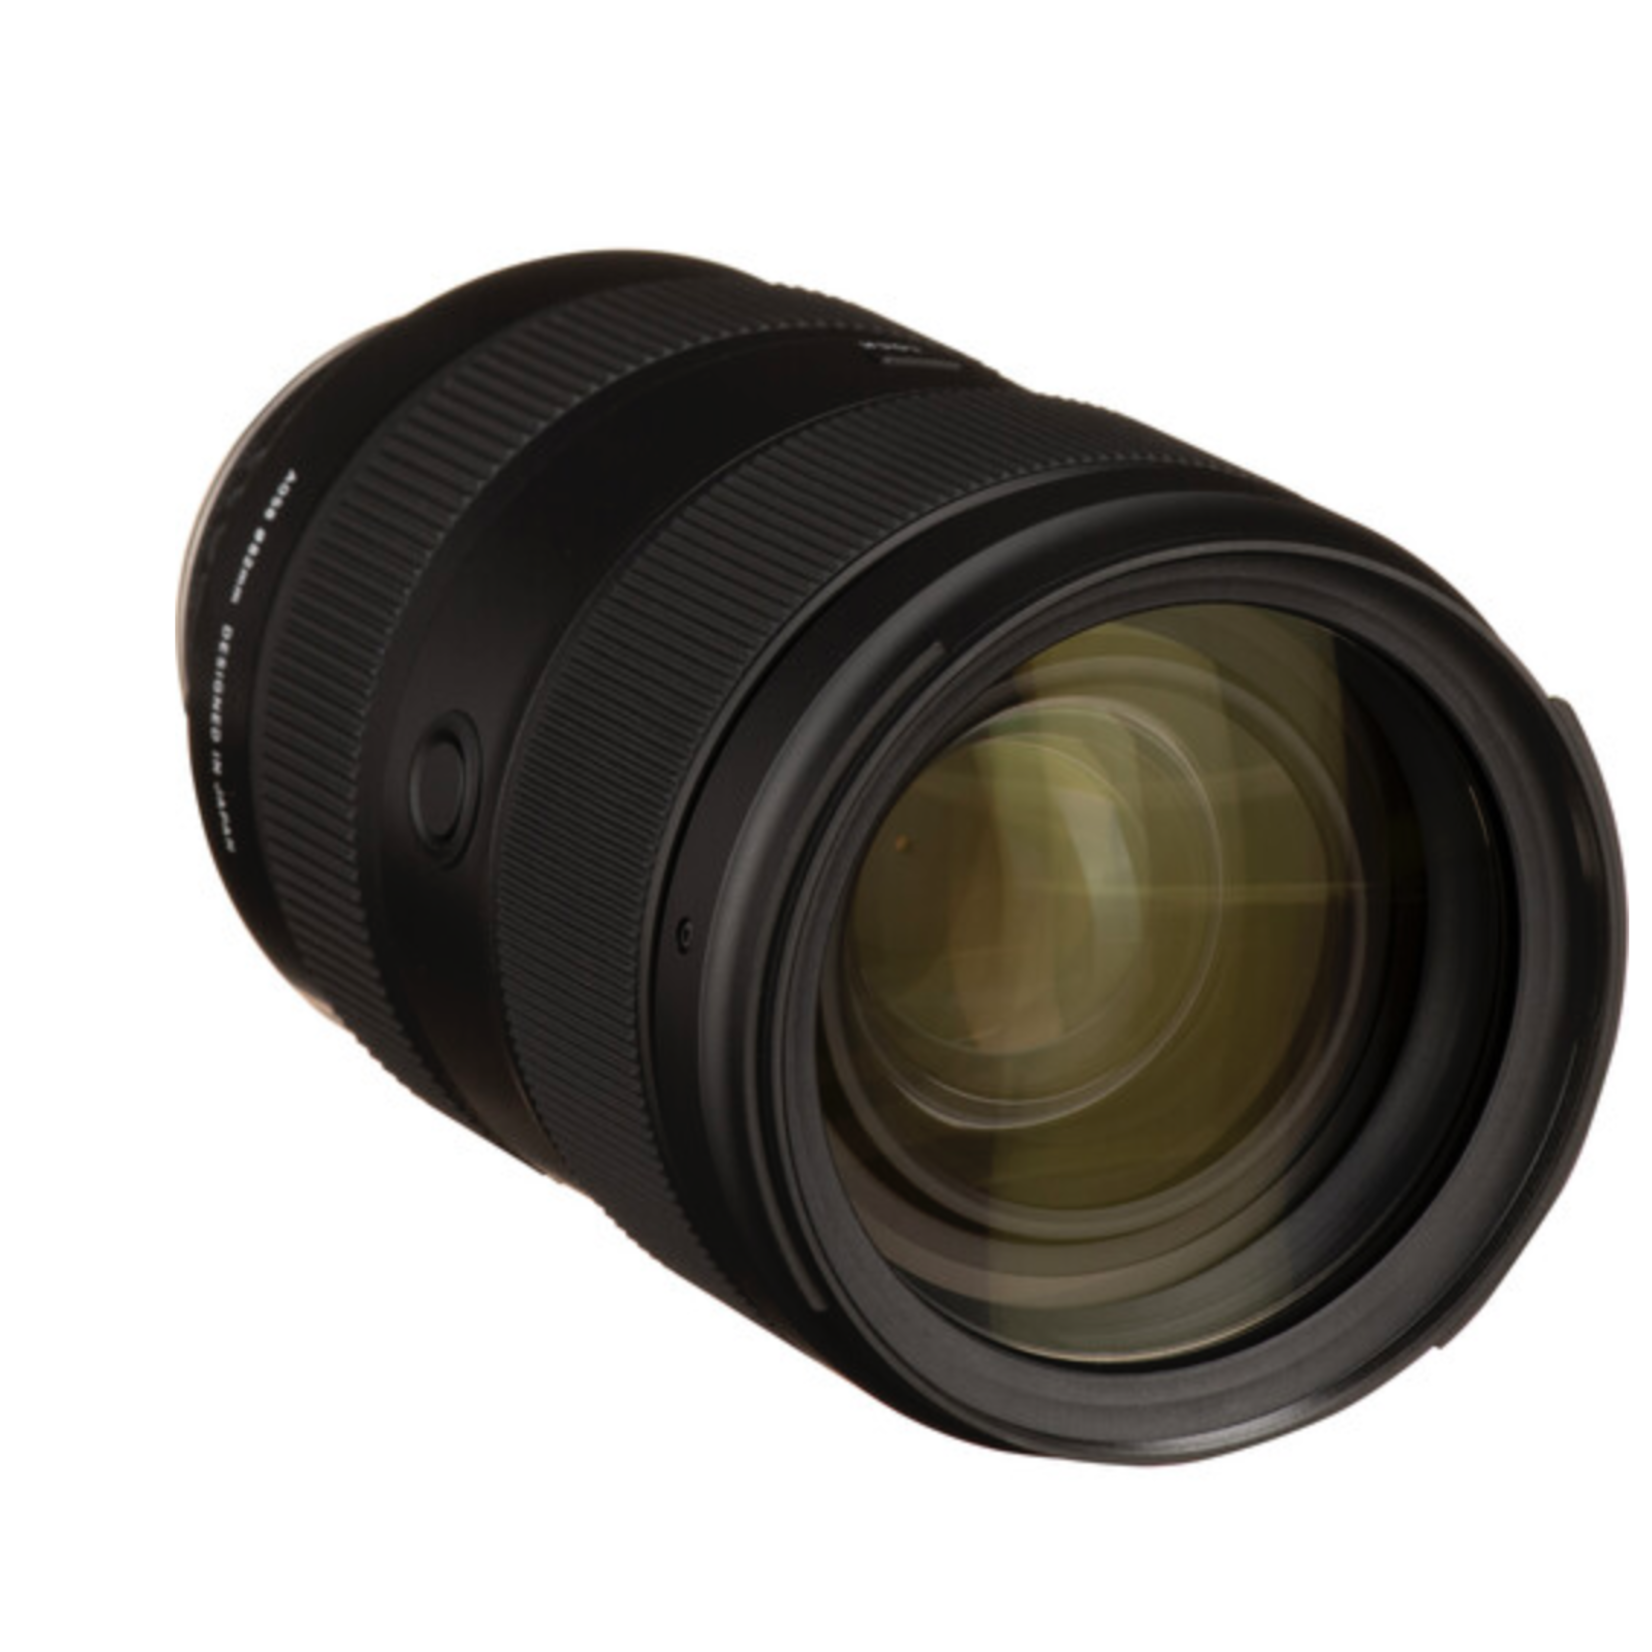 Tamron Tamron 35-150mm f/2-2.8 Di III VXD Lens (Nikon Z)